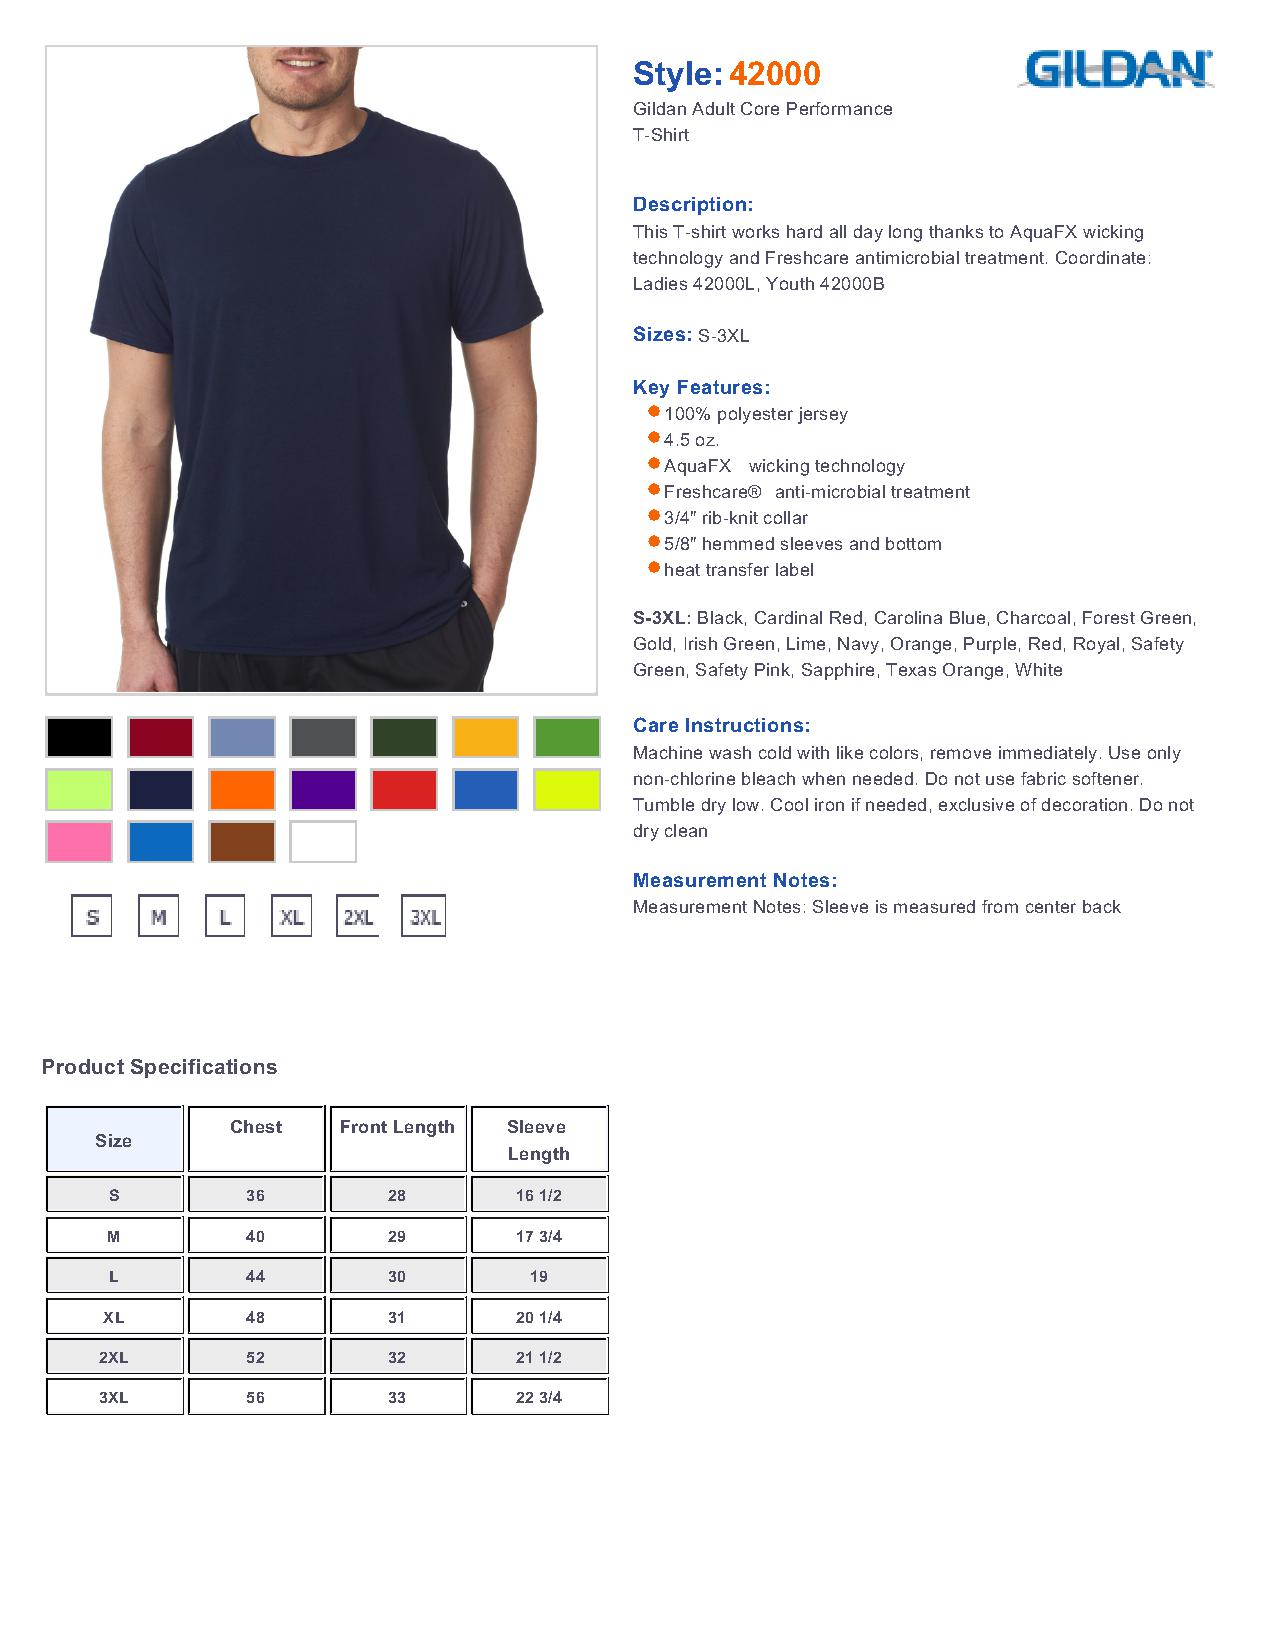 Gildan 42000 - Adult Core Performance T-Shirt $5.37 - Men's T-Shirts